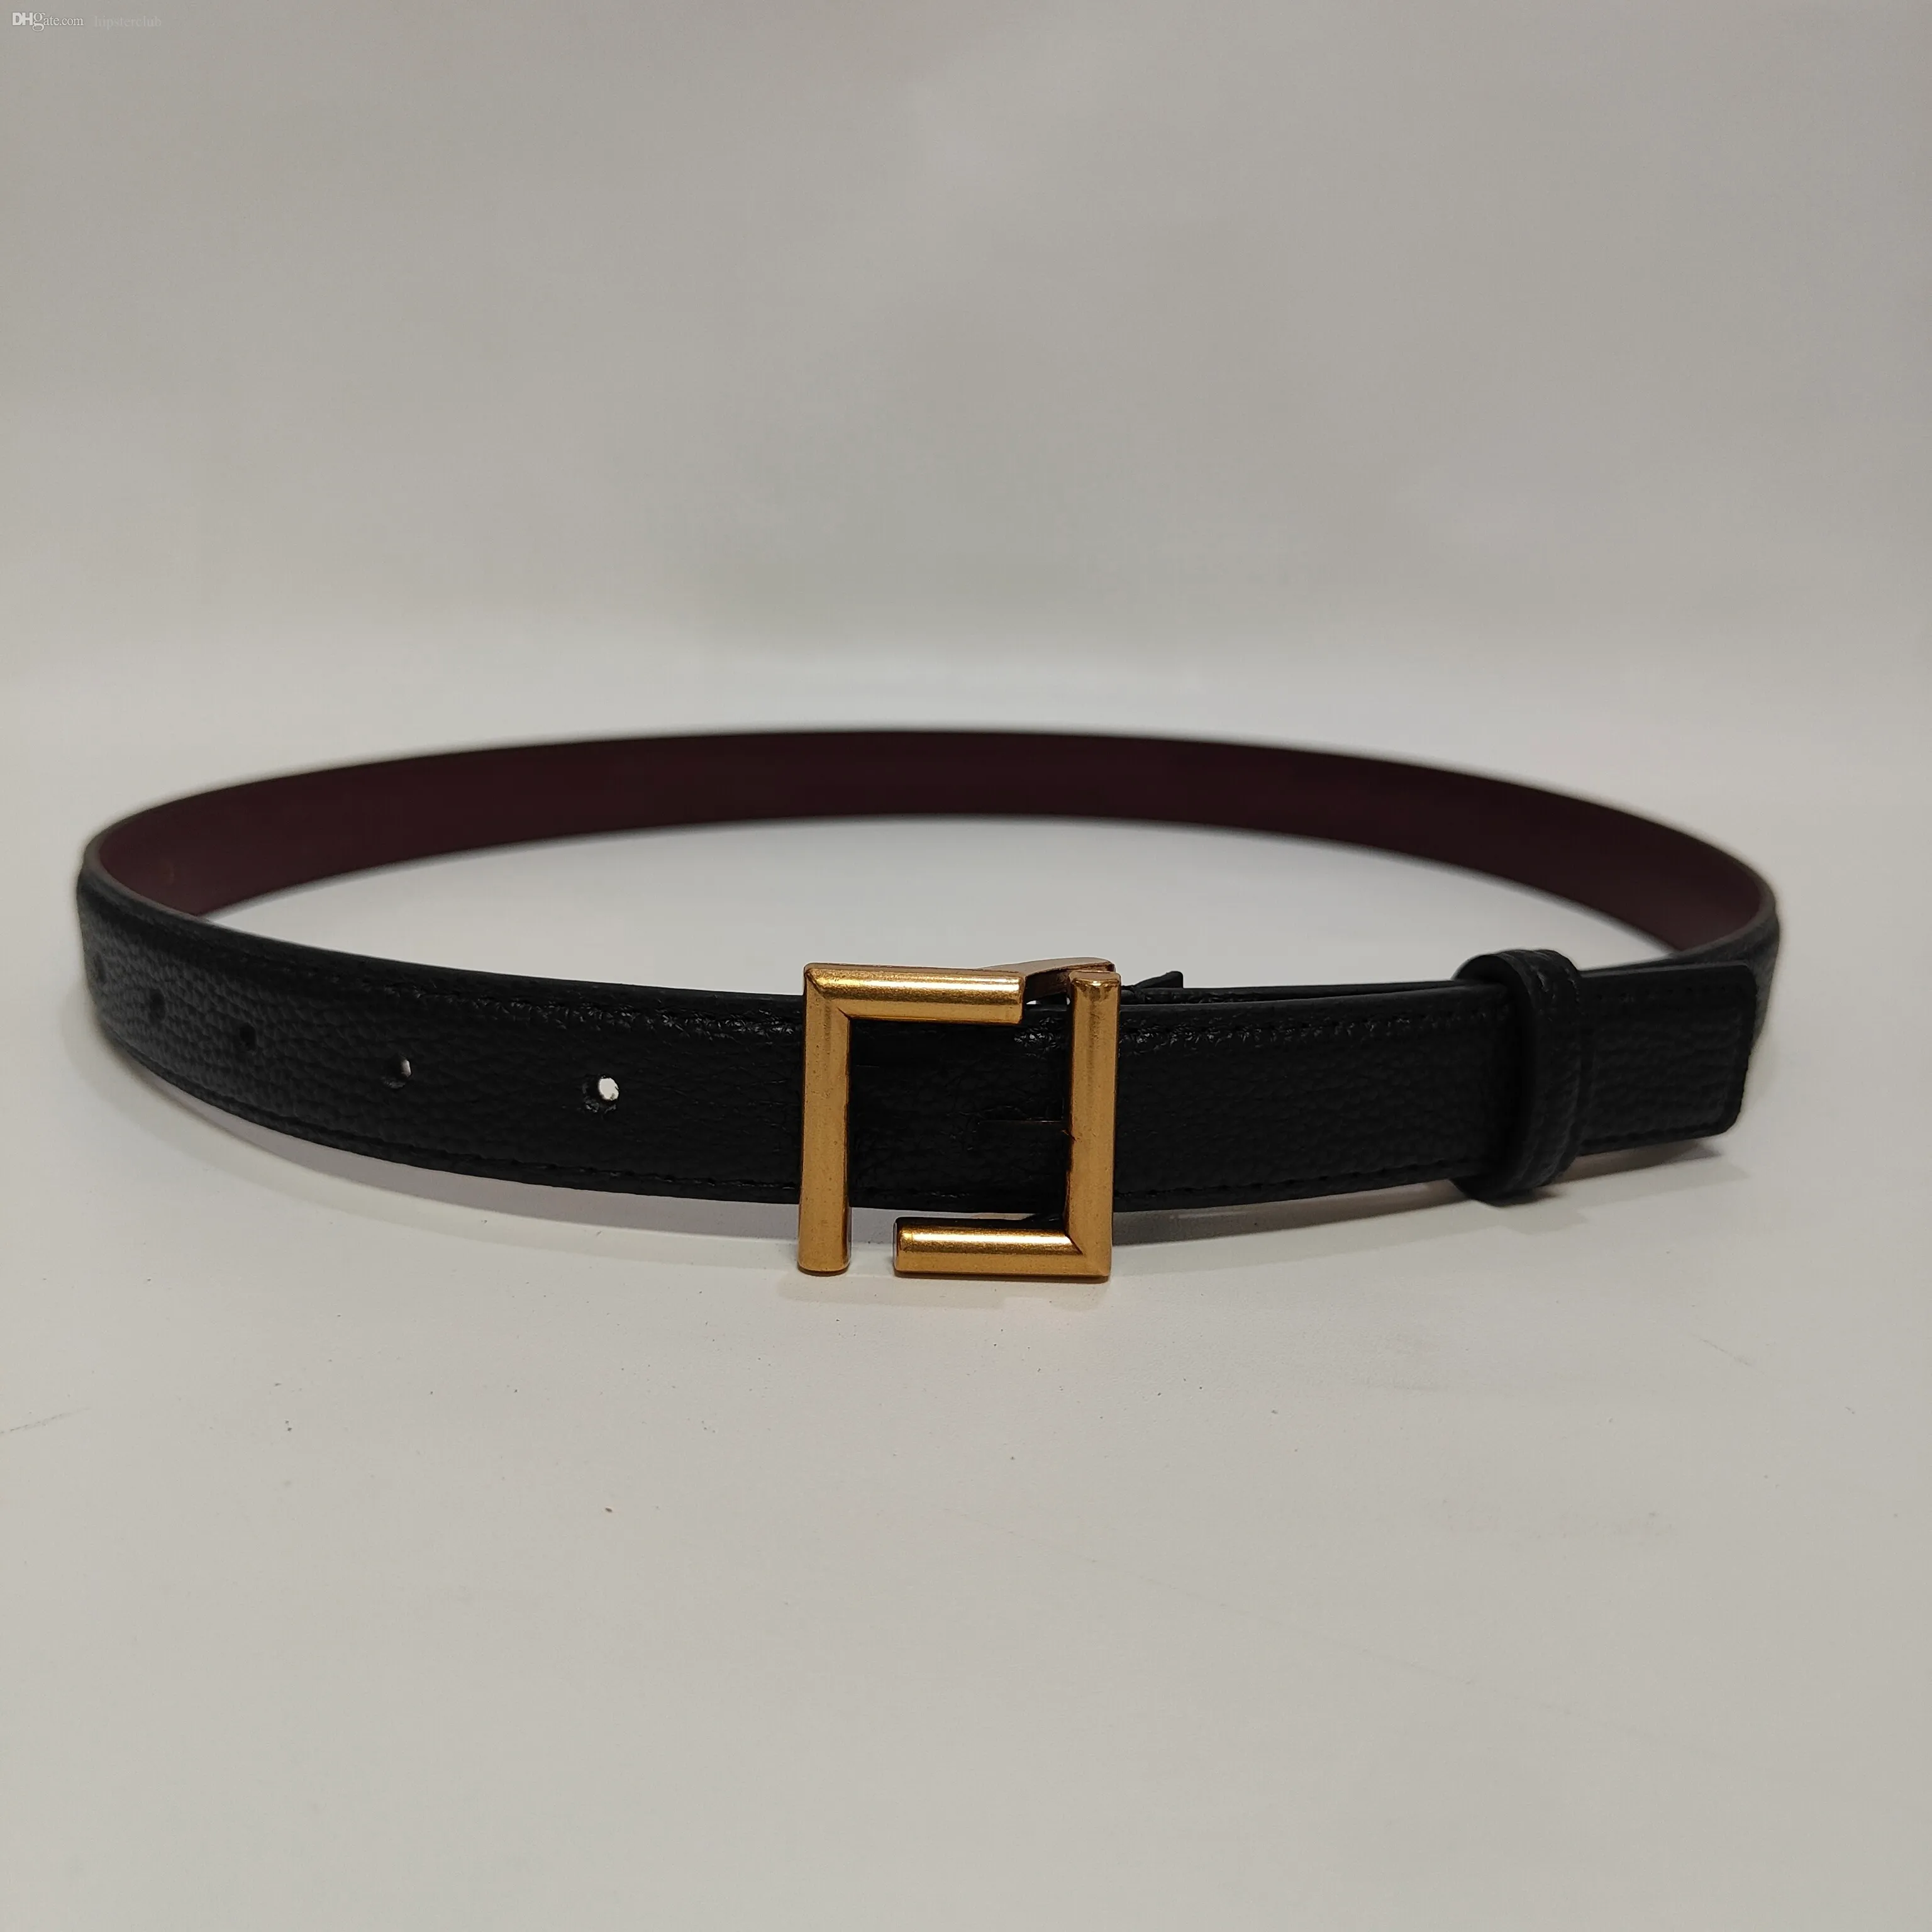 Men's designer belt fashionable women's FF belts 25mm Classic 3 Color Thin waistband genuine leather belt for womens 8C0648AAIWF196R